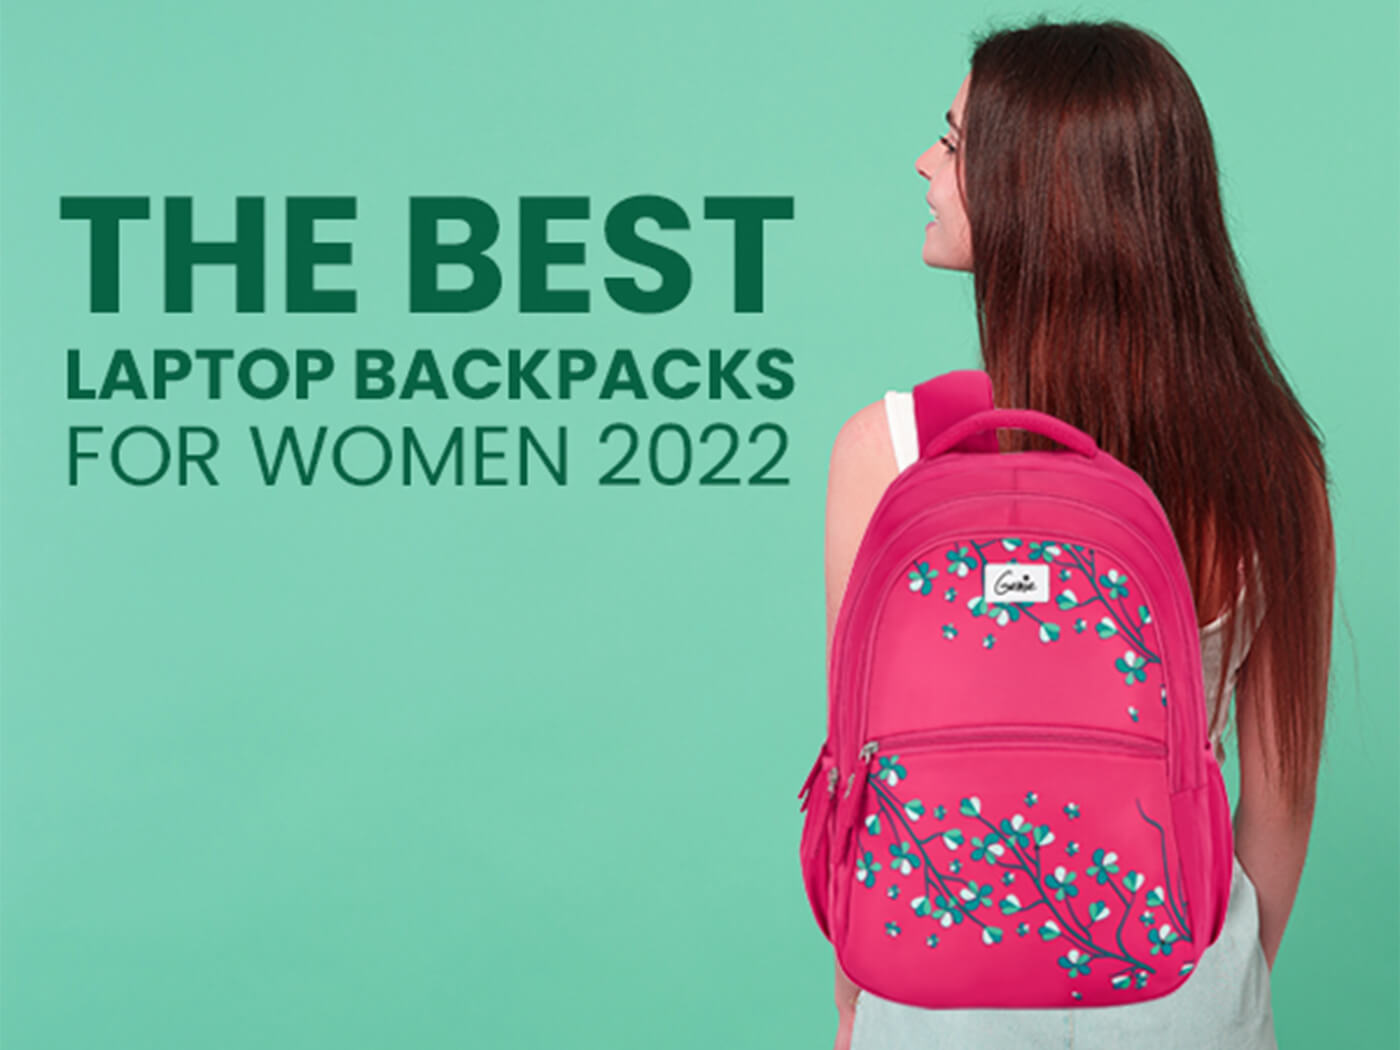 The Best Laptop Backpacks for Women in 2022